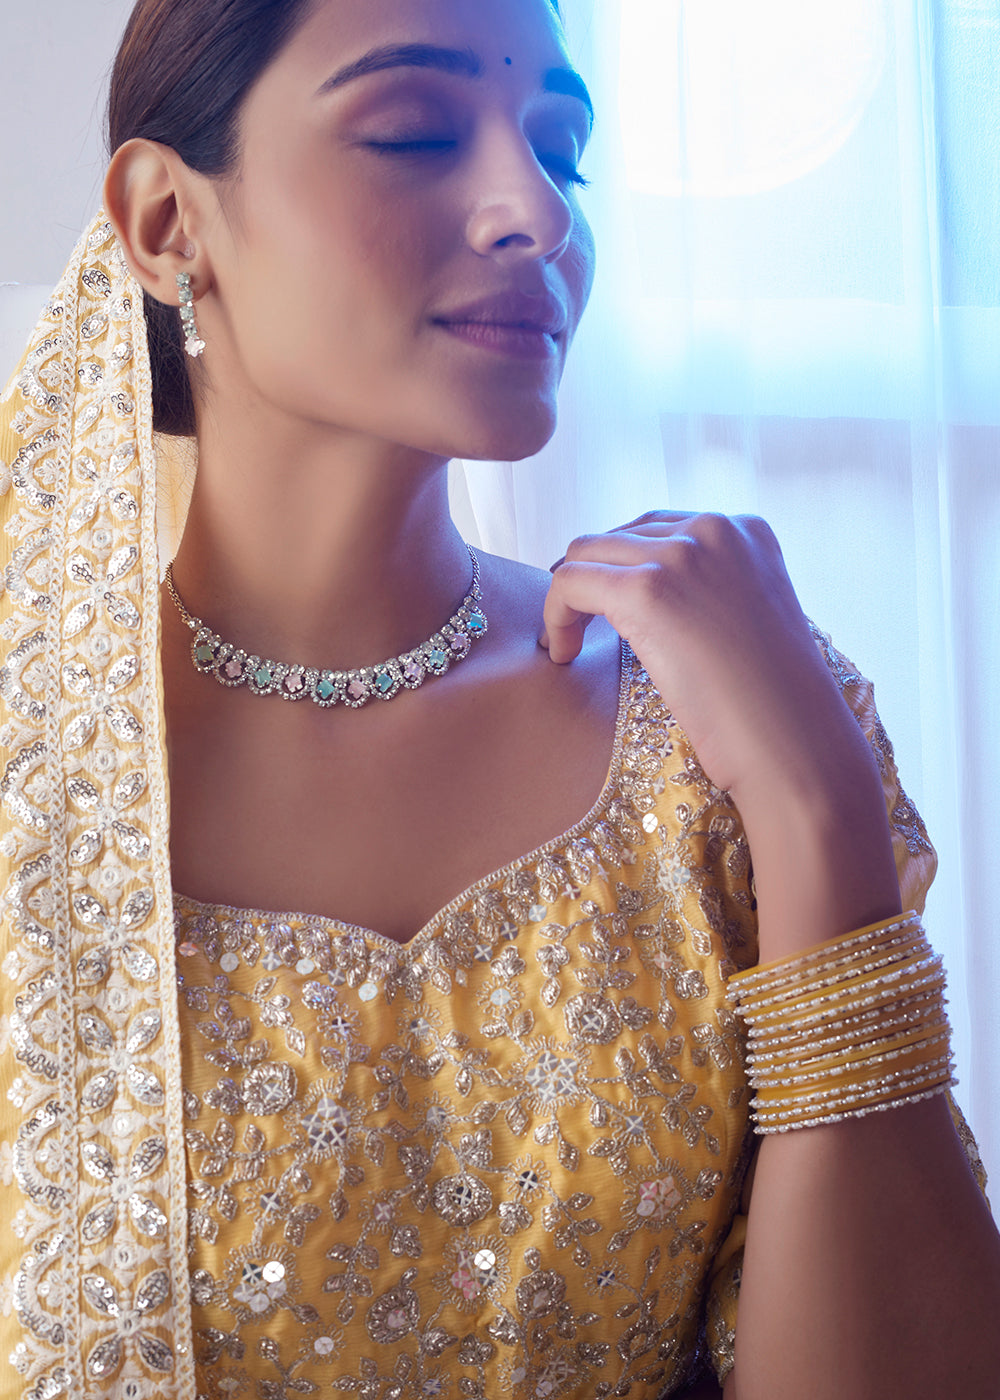 Buy Now Yellow Designer Style Embroidered Wedding Lehenga Choli Online in USA, UK, Canada & Worldwide at Empress Clothing.